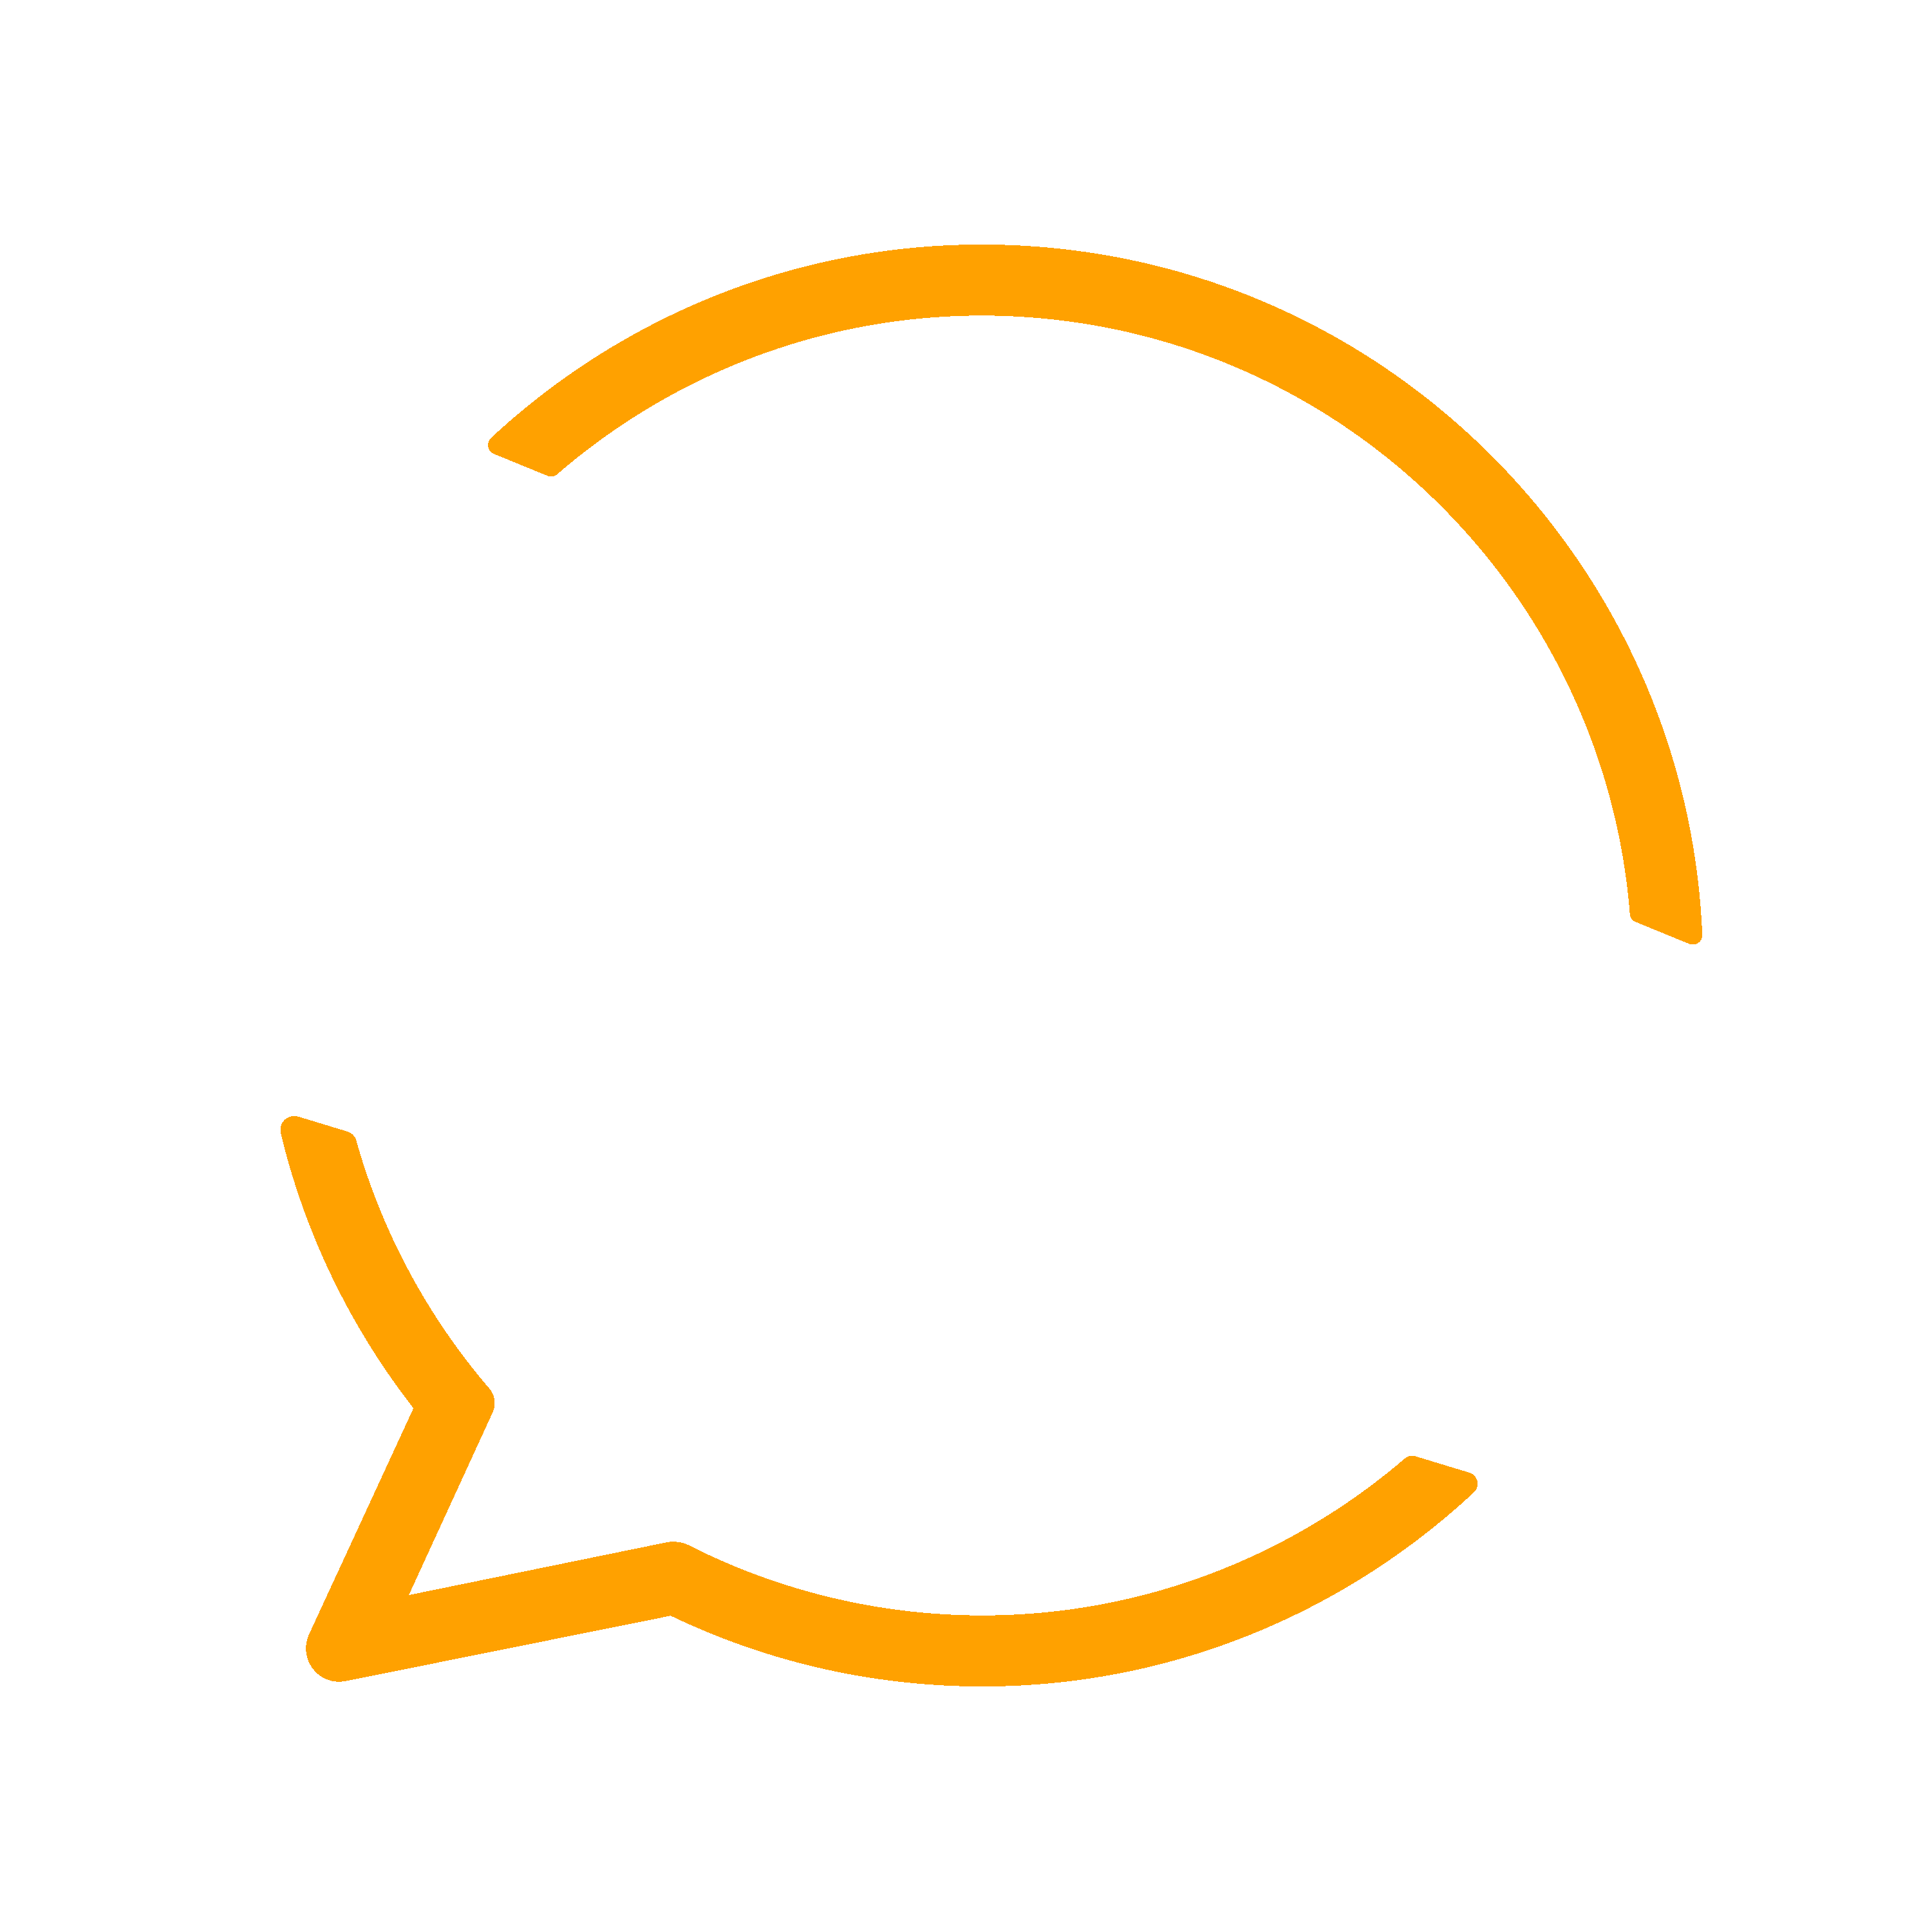 Frank King | The Mental Health Comedian